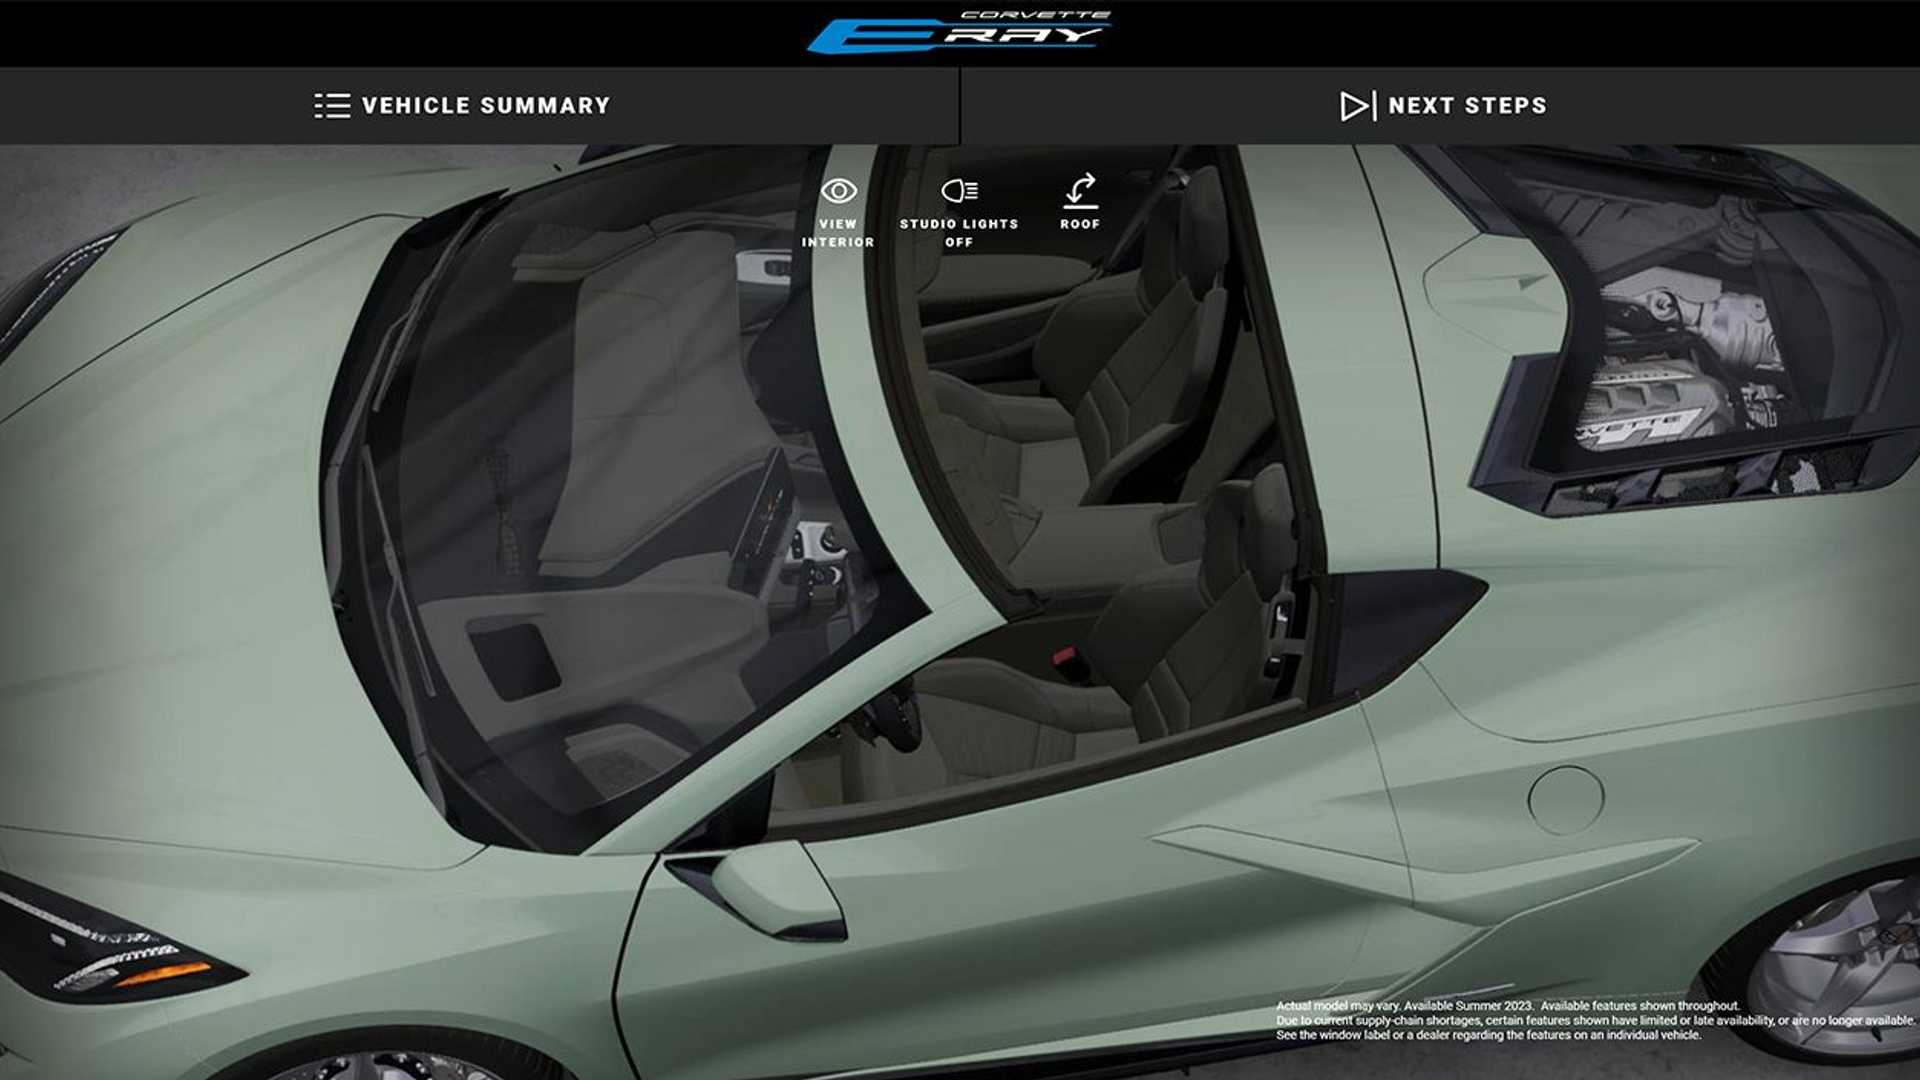 2024-chevy-corvette-e-ray-as-shown-in-visualizer (6).jpg